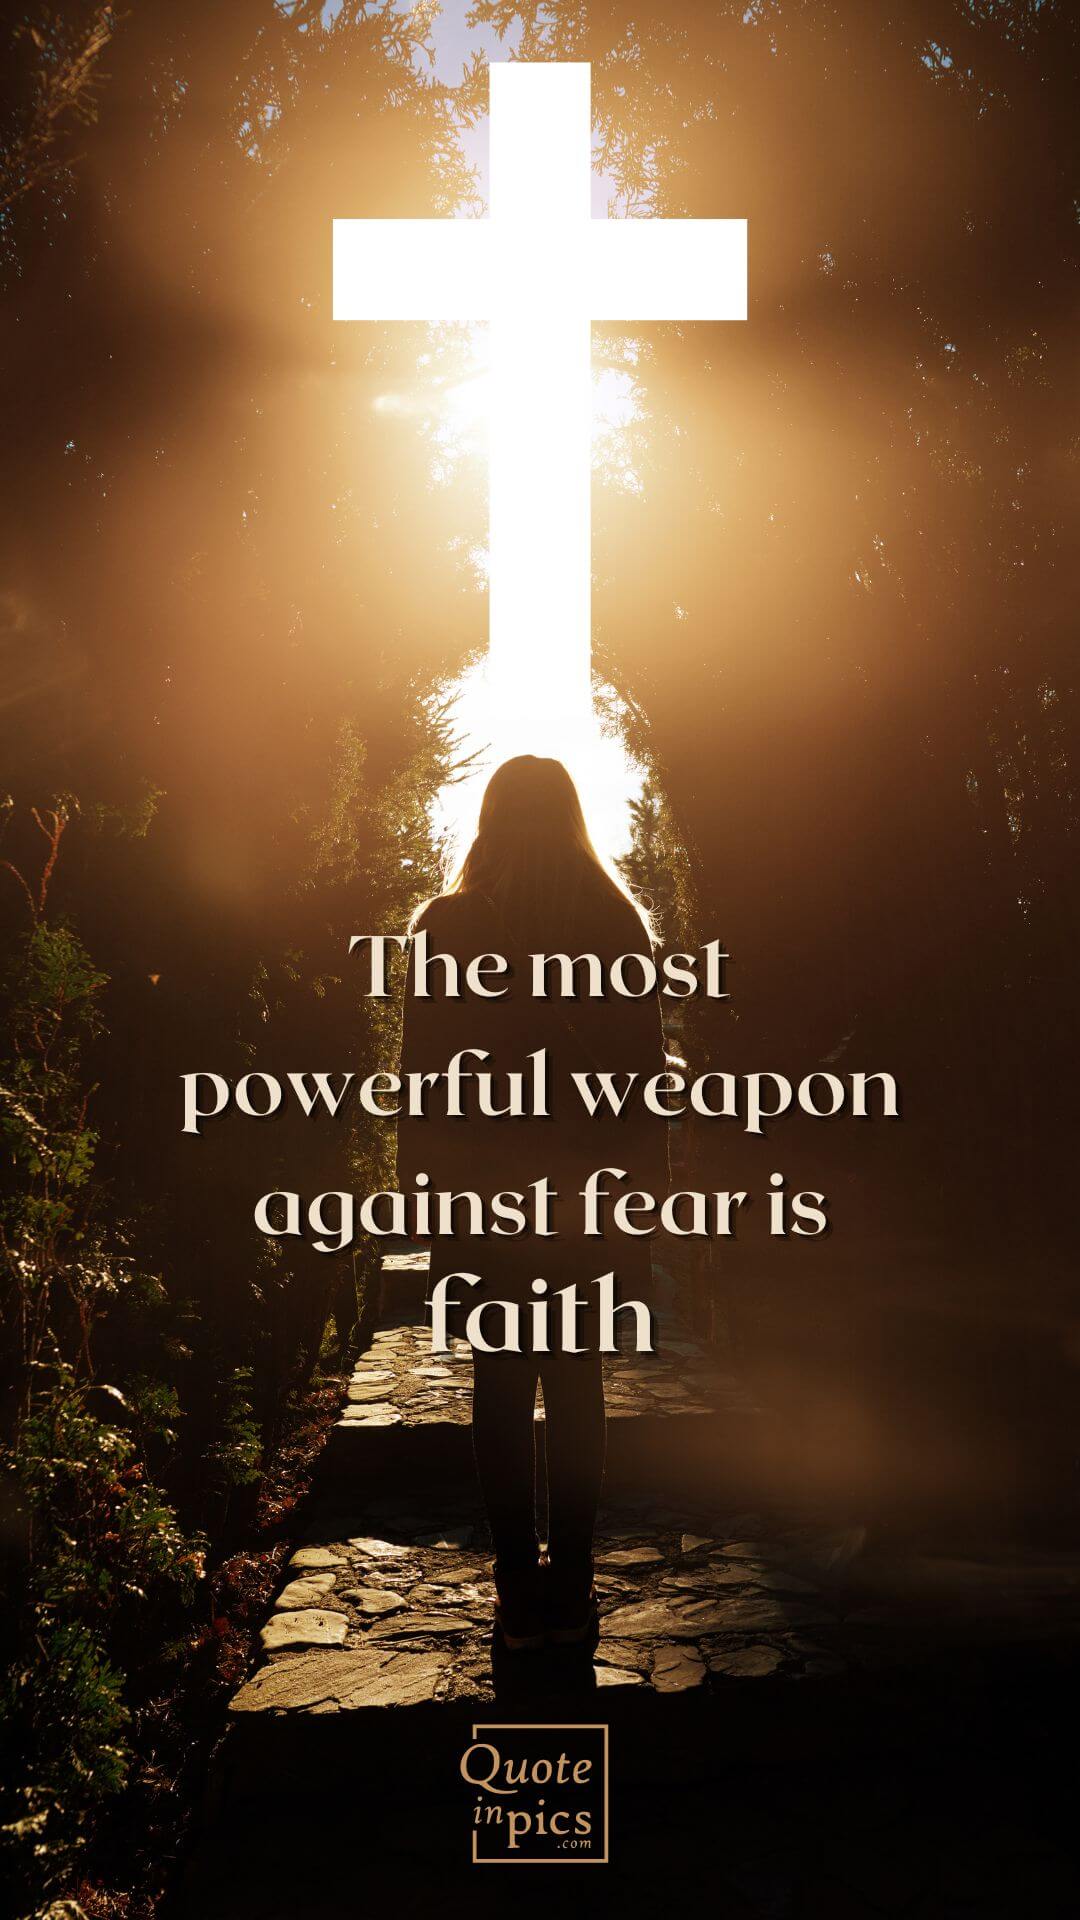 The most powerful weapon against fear is faith